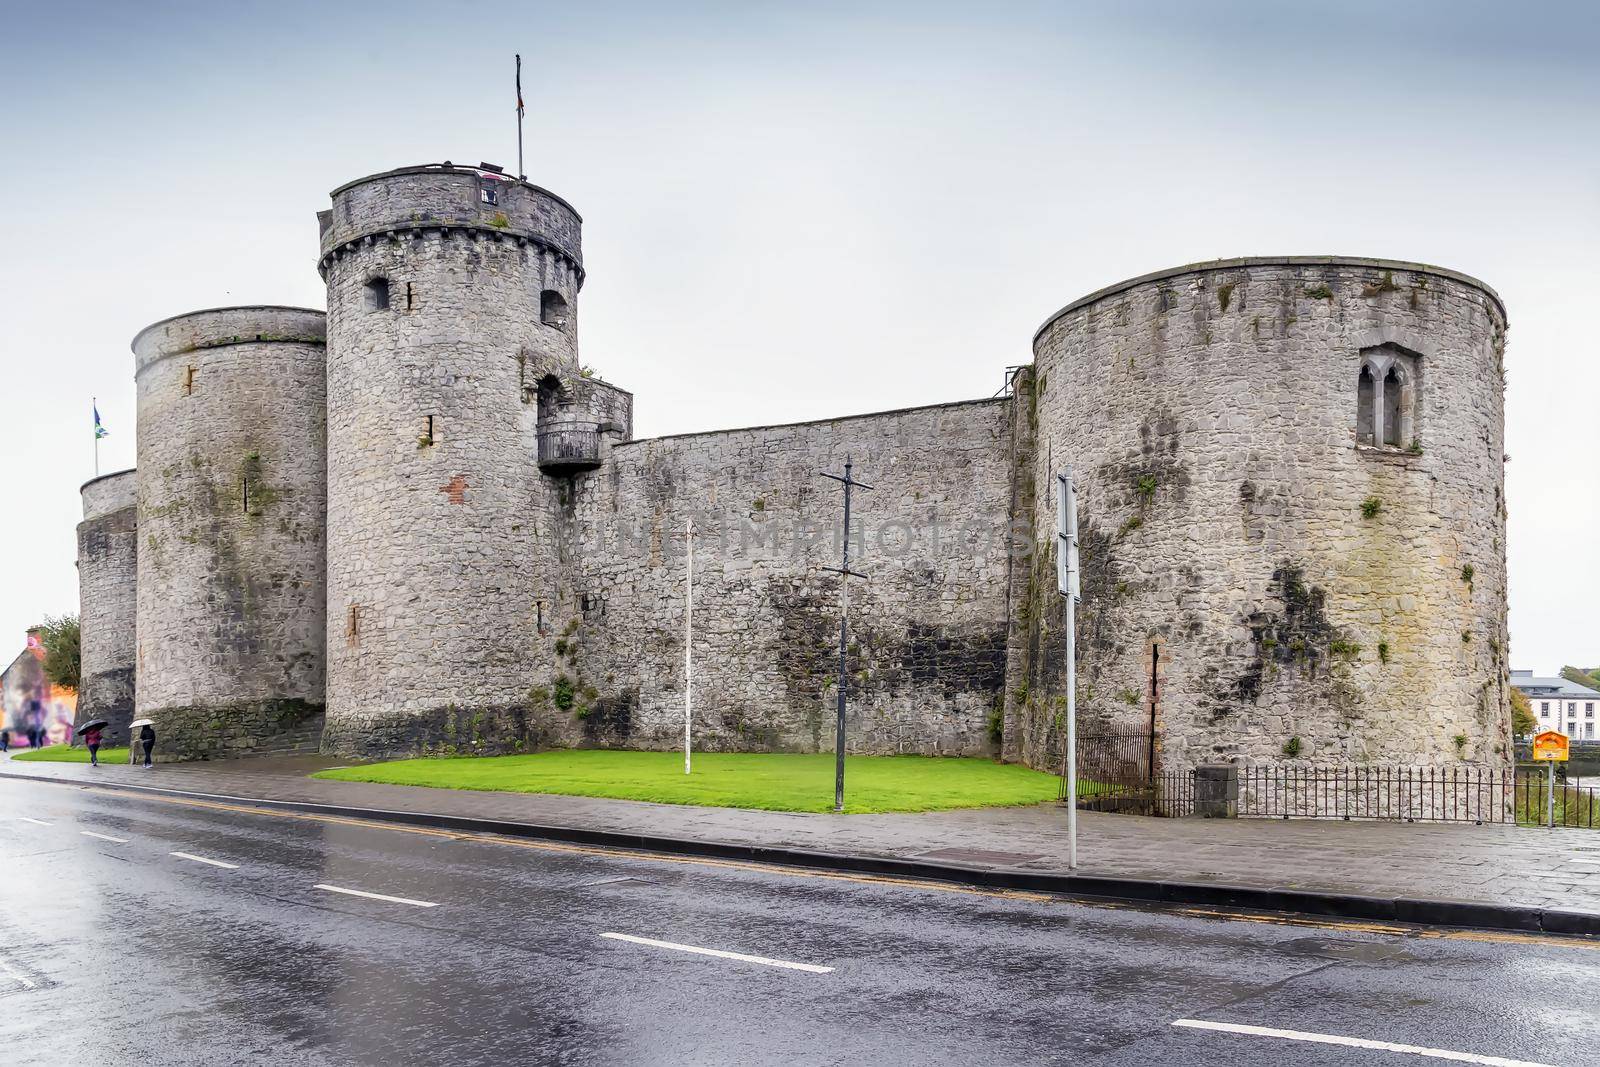 King John's Castle, Limerick, Ireland by borisb17